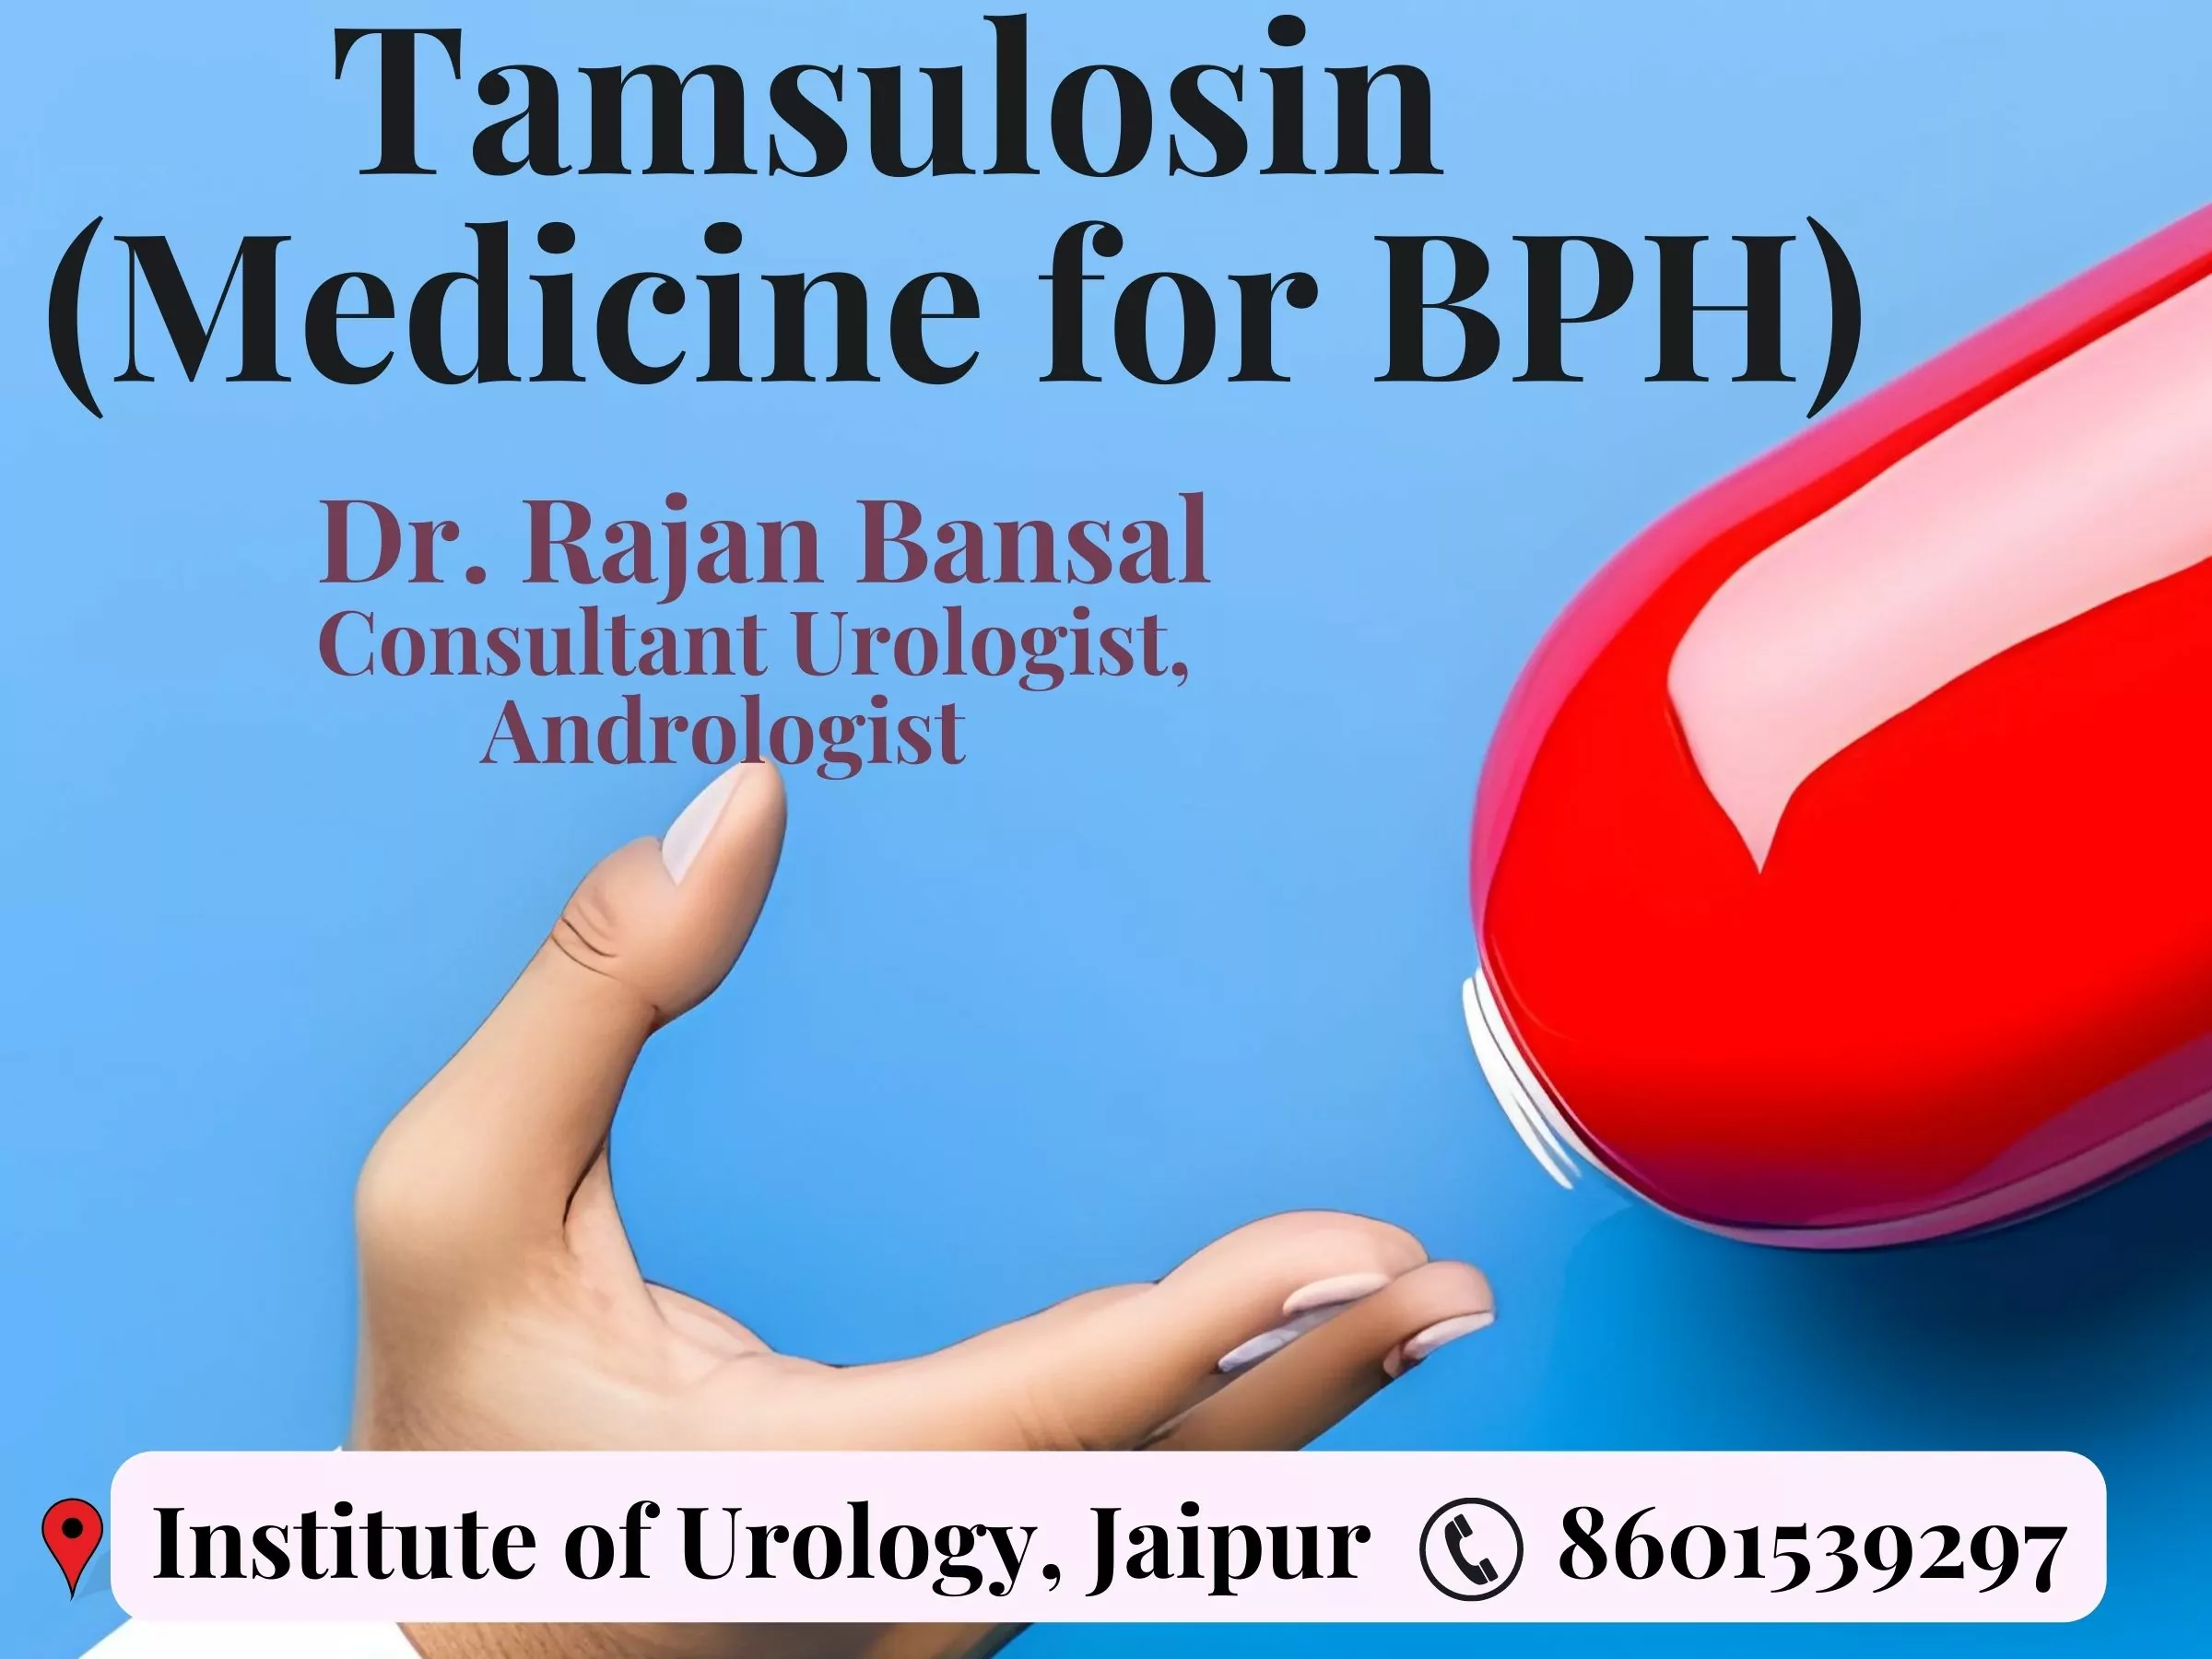 Best doctor hospital for BPH prostate enlargement in Jaipur Rajasthan Dr. Rajan Bansal